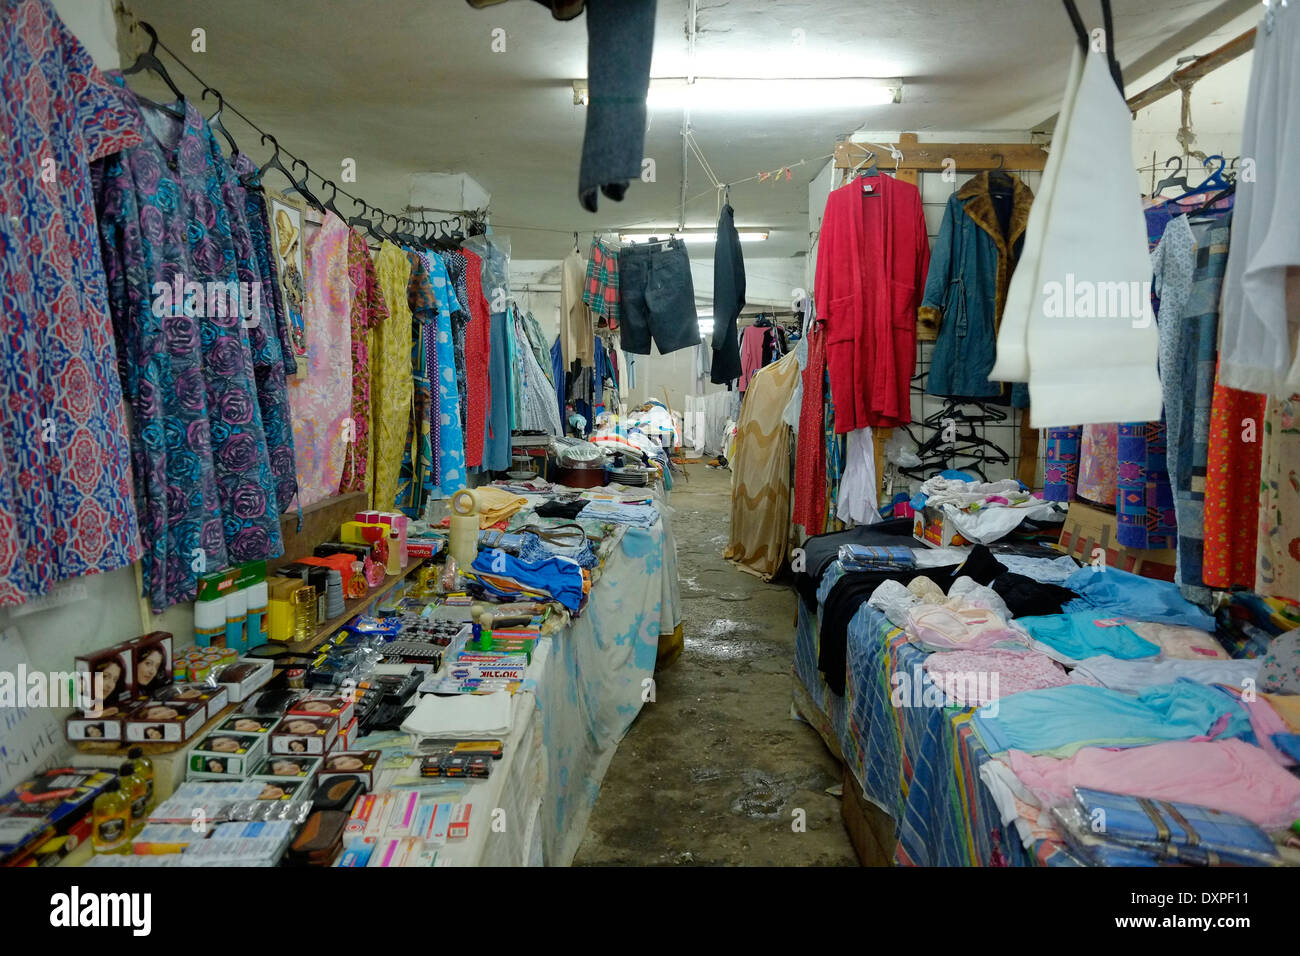 The "Russian Flea Market" in the city of Netanya Israel Stock Photo - Alamy